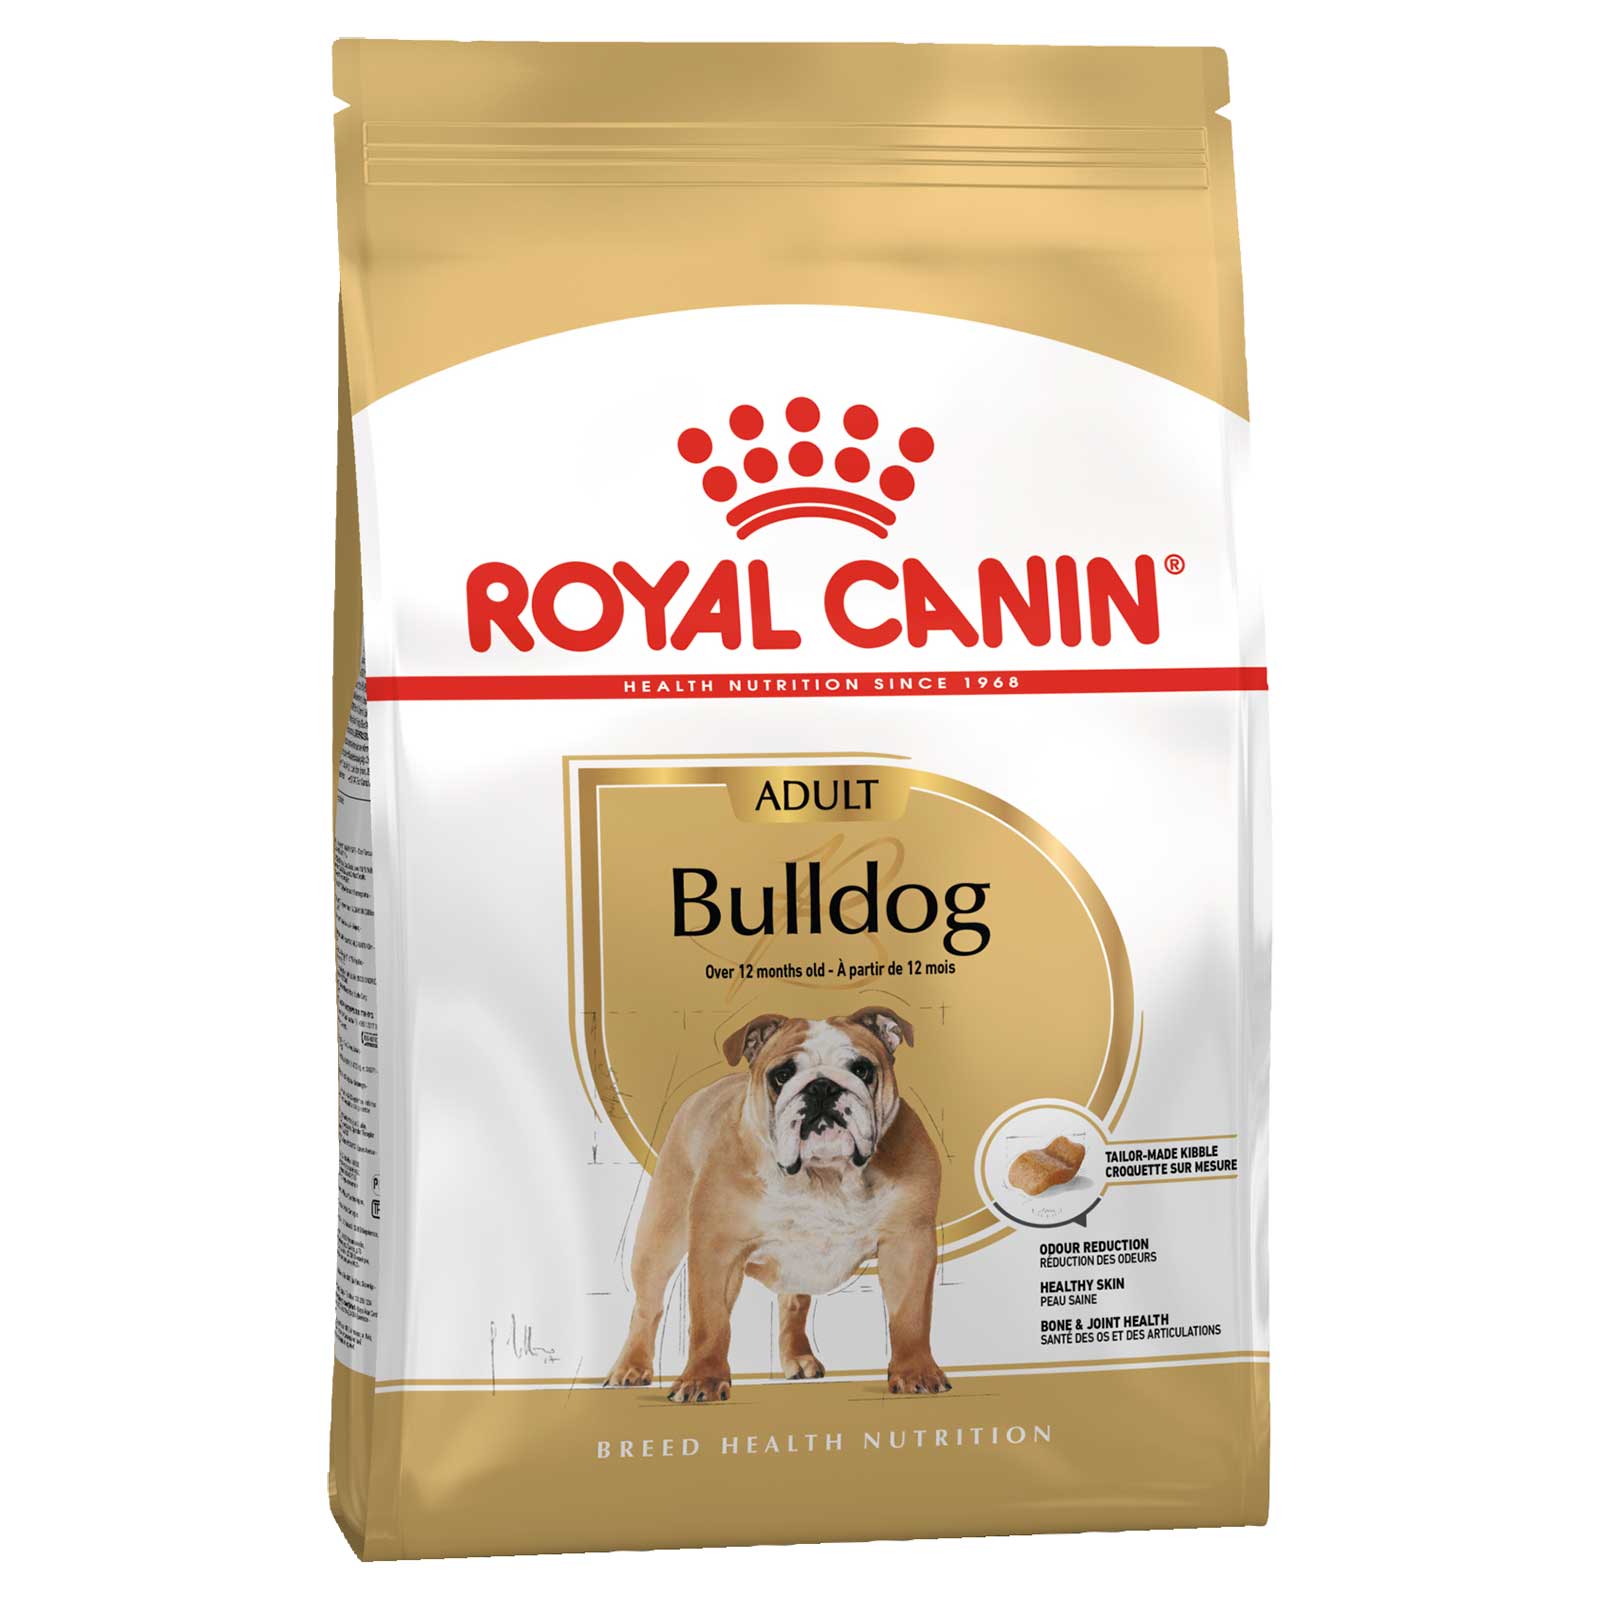 Royal Canin Dog Food Adult Bulldog